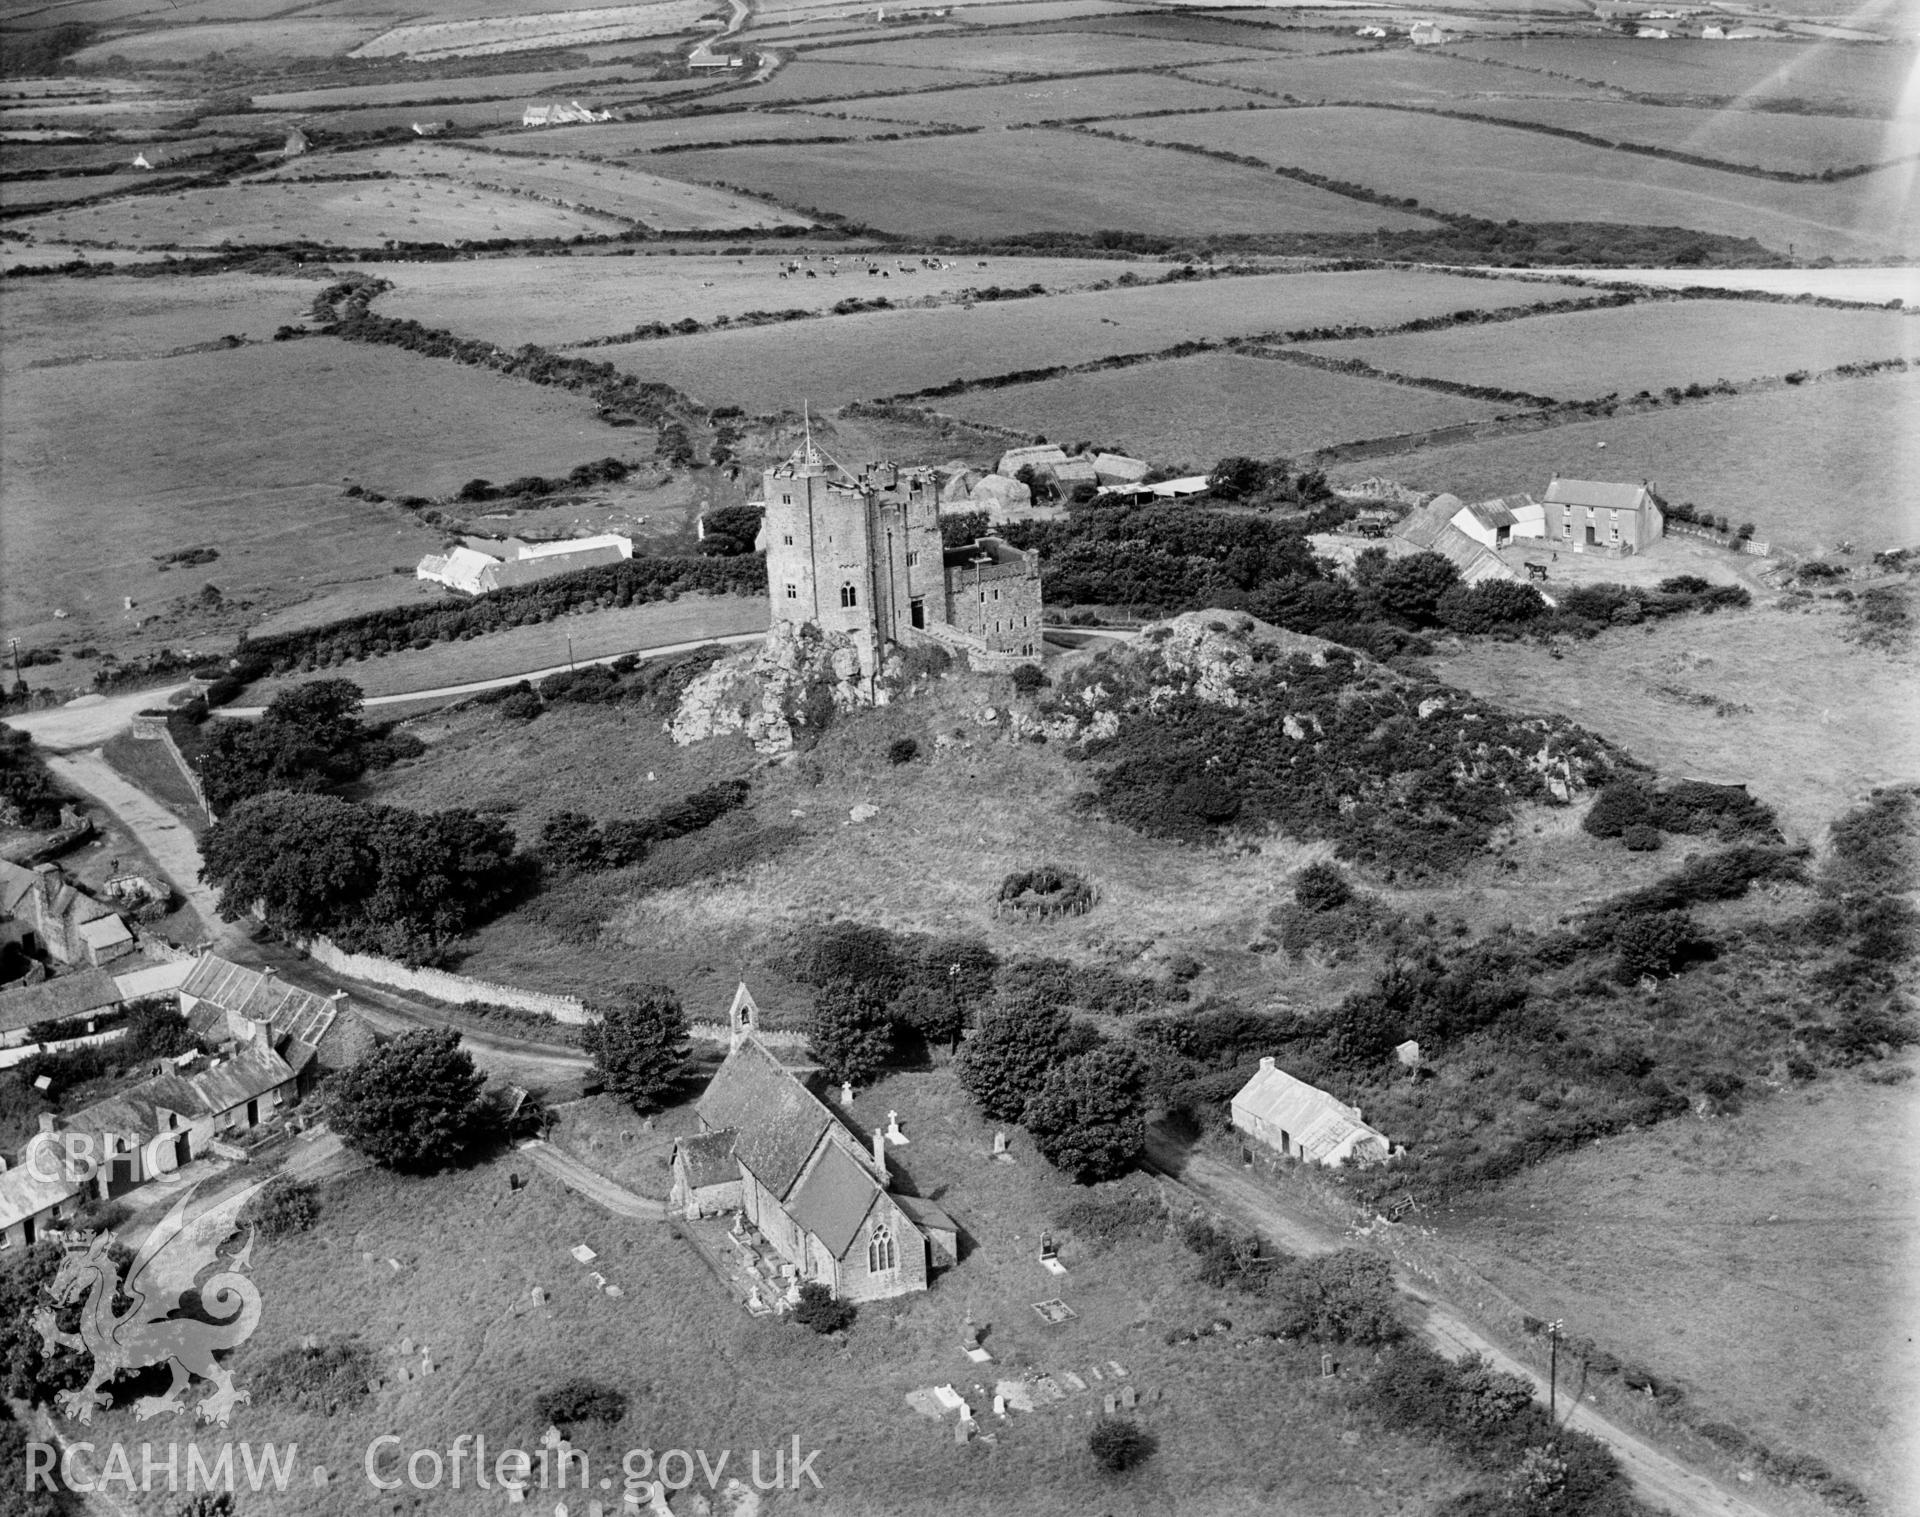 View of Roch Castle and Castle Farm, Roch, Pembrokeshire, oblique aerial view. 5?x4? black and white glass plate negative.